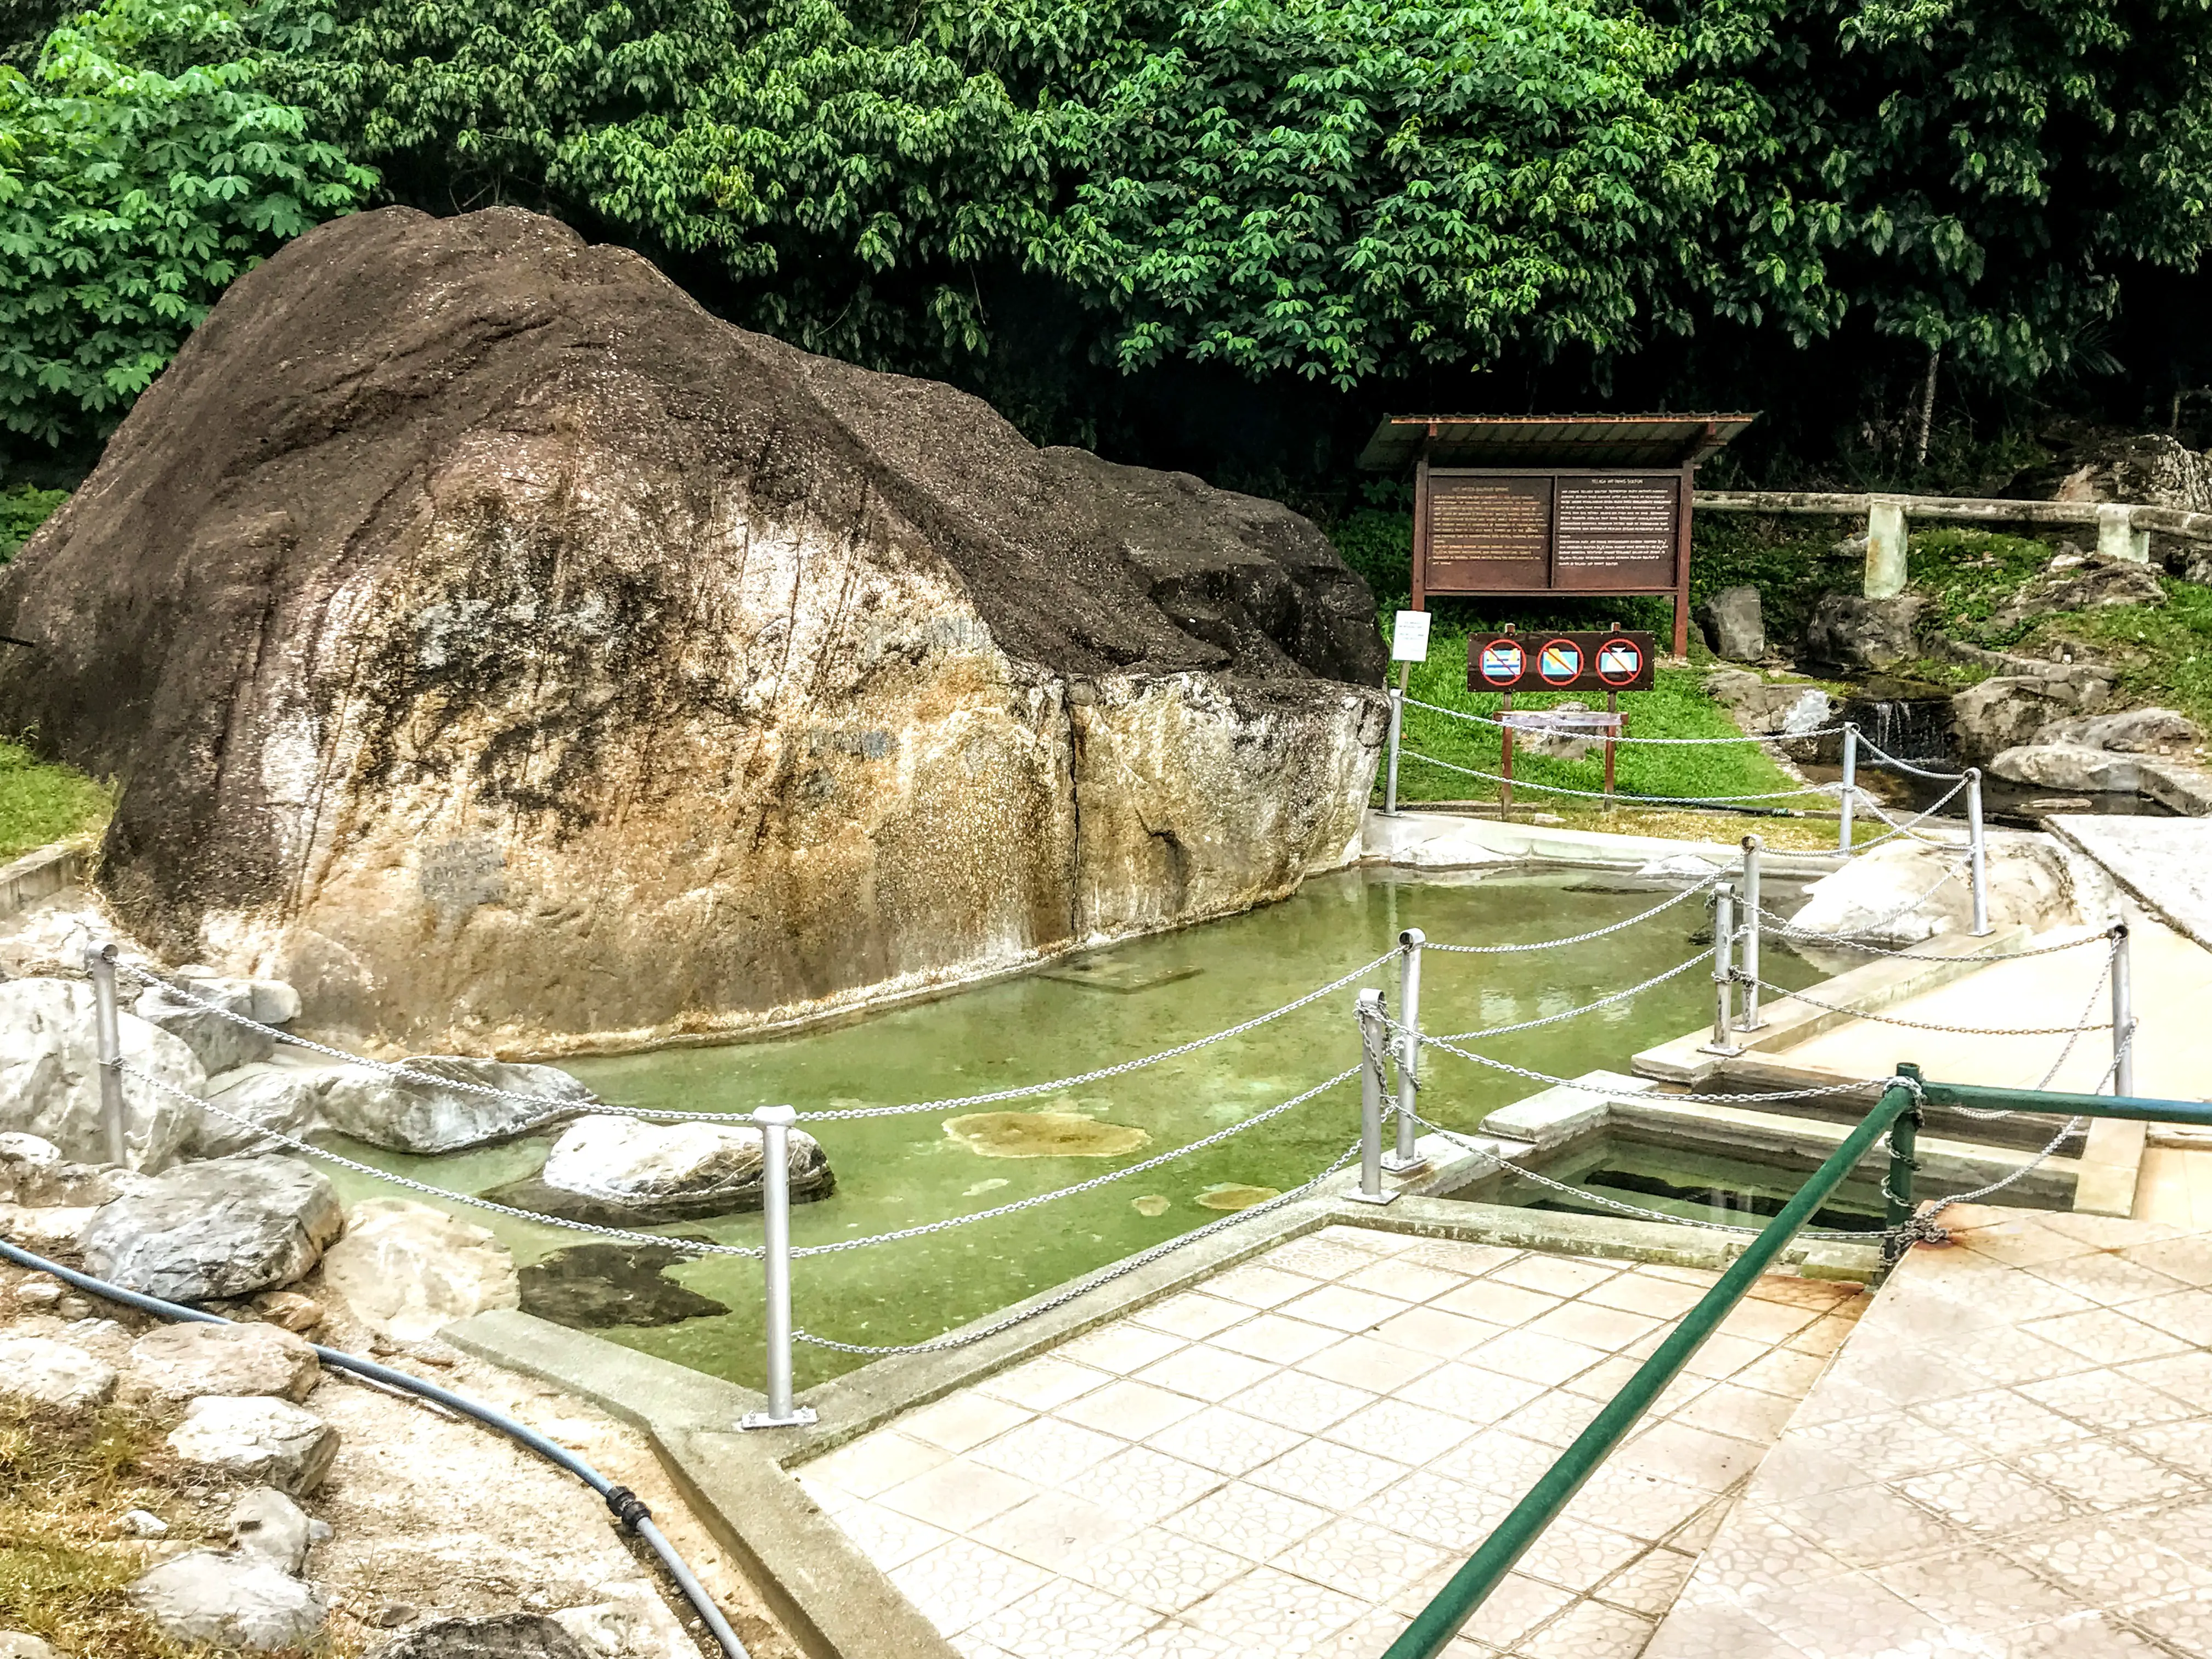 Poring Hot Springs, Borneo, Malaysia